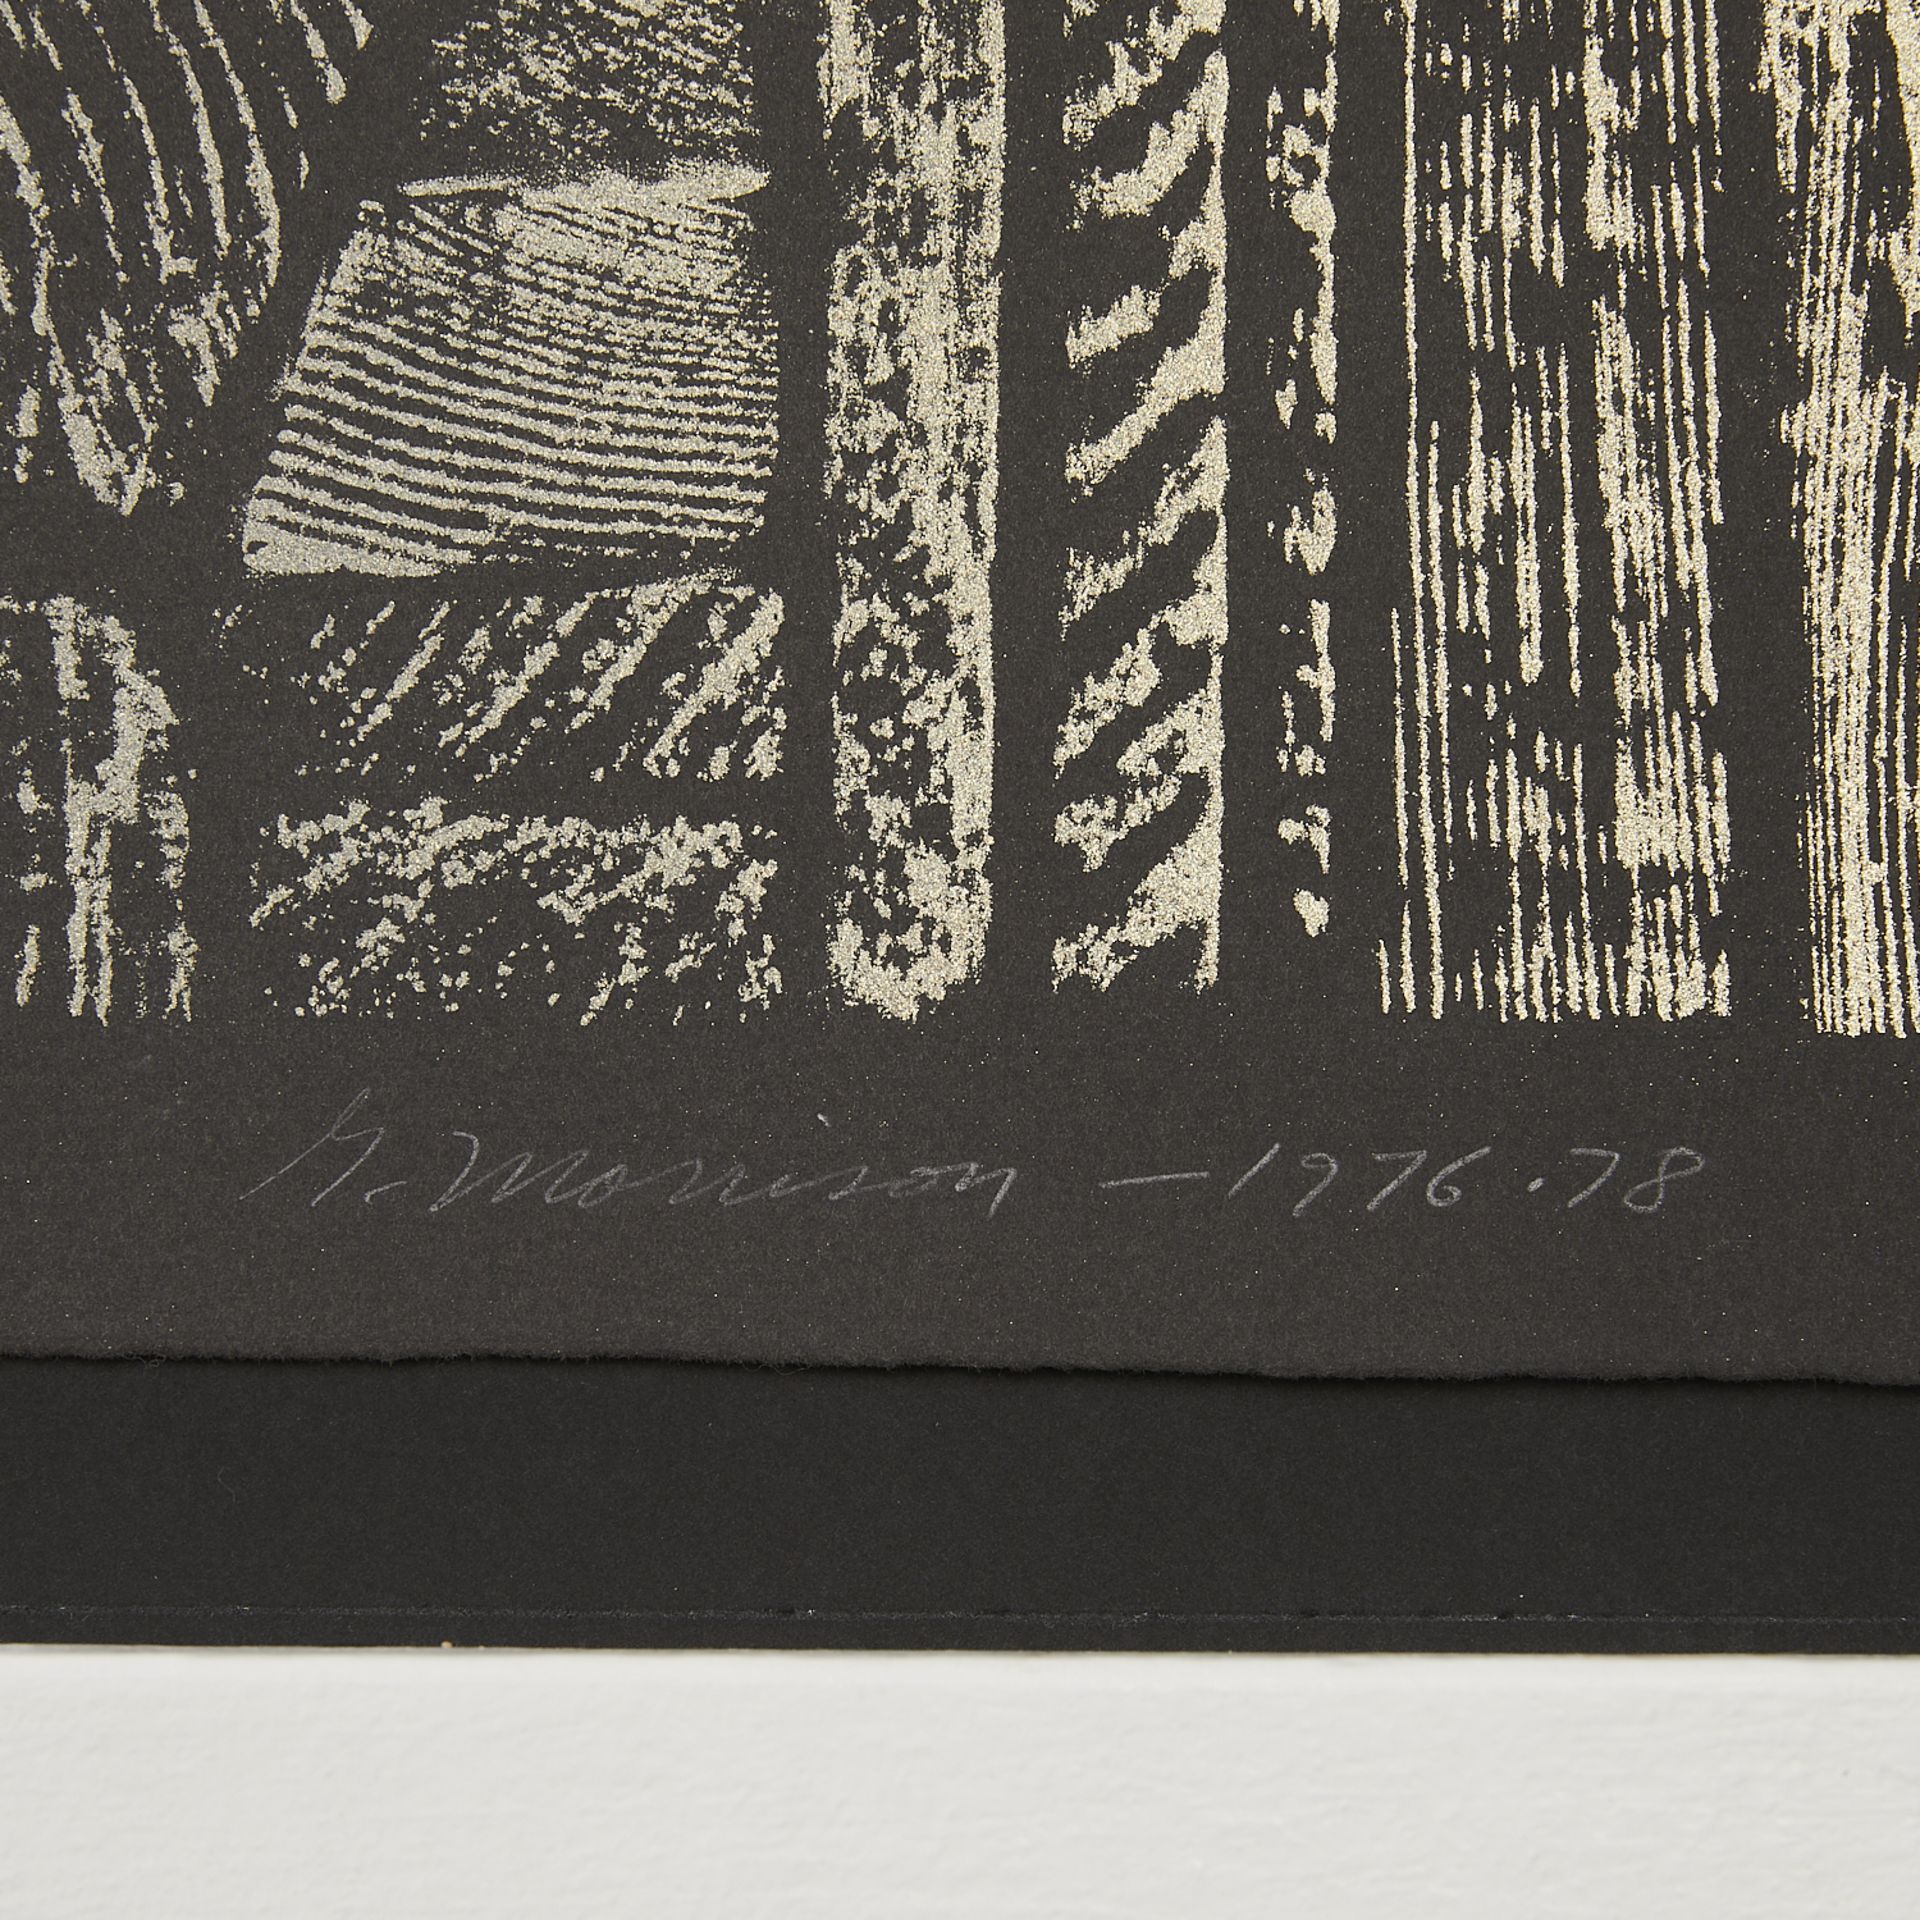 George Morrison Woodgrain Woodcut 1976-78 - Bild 2 aus 8